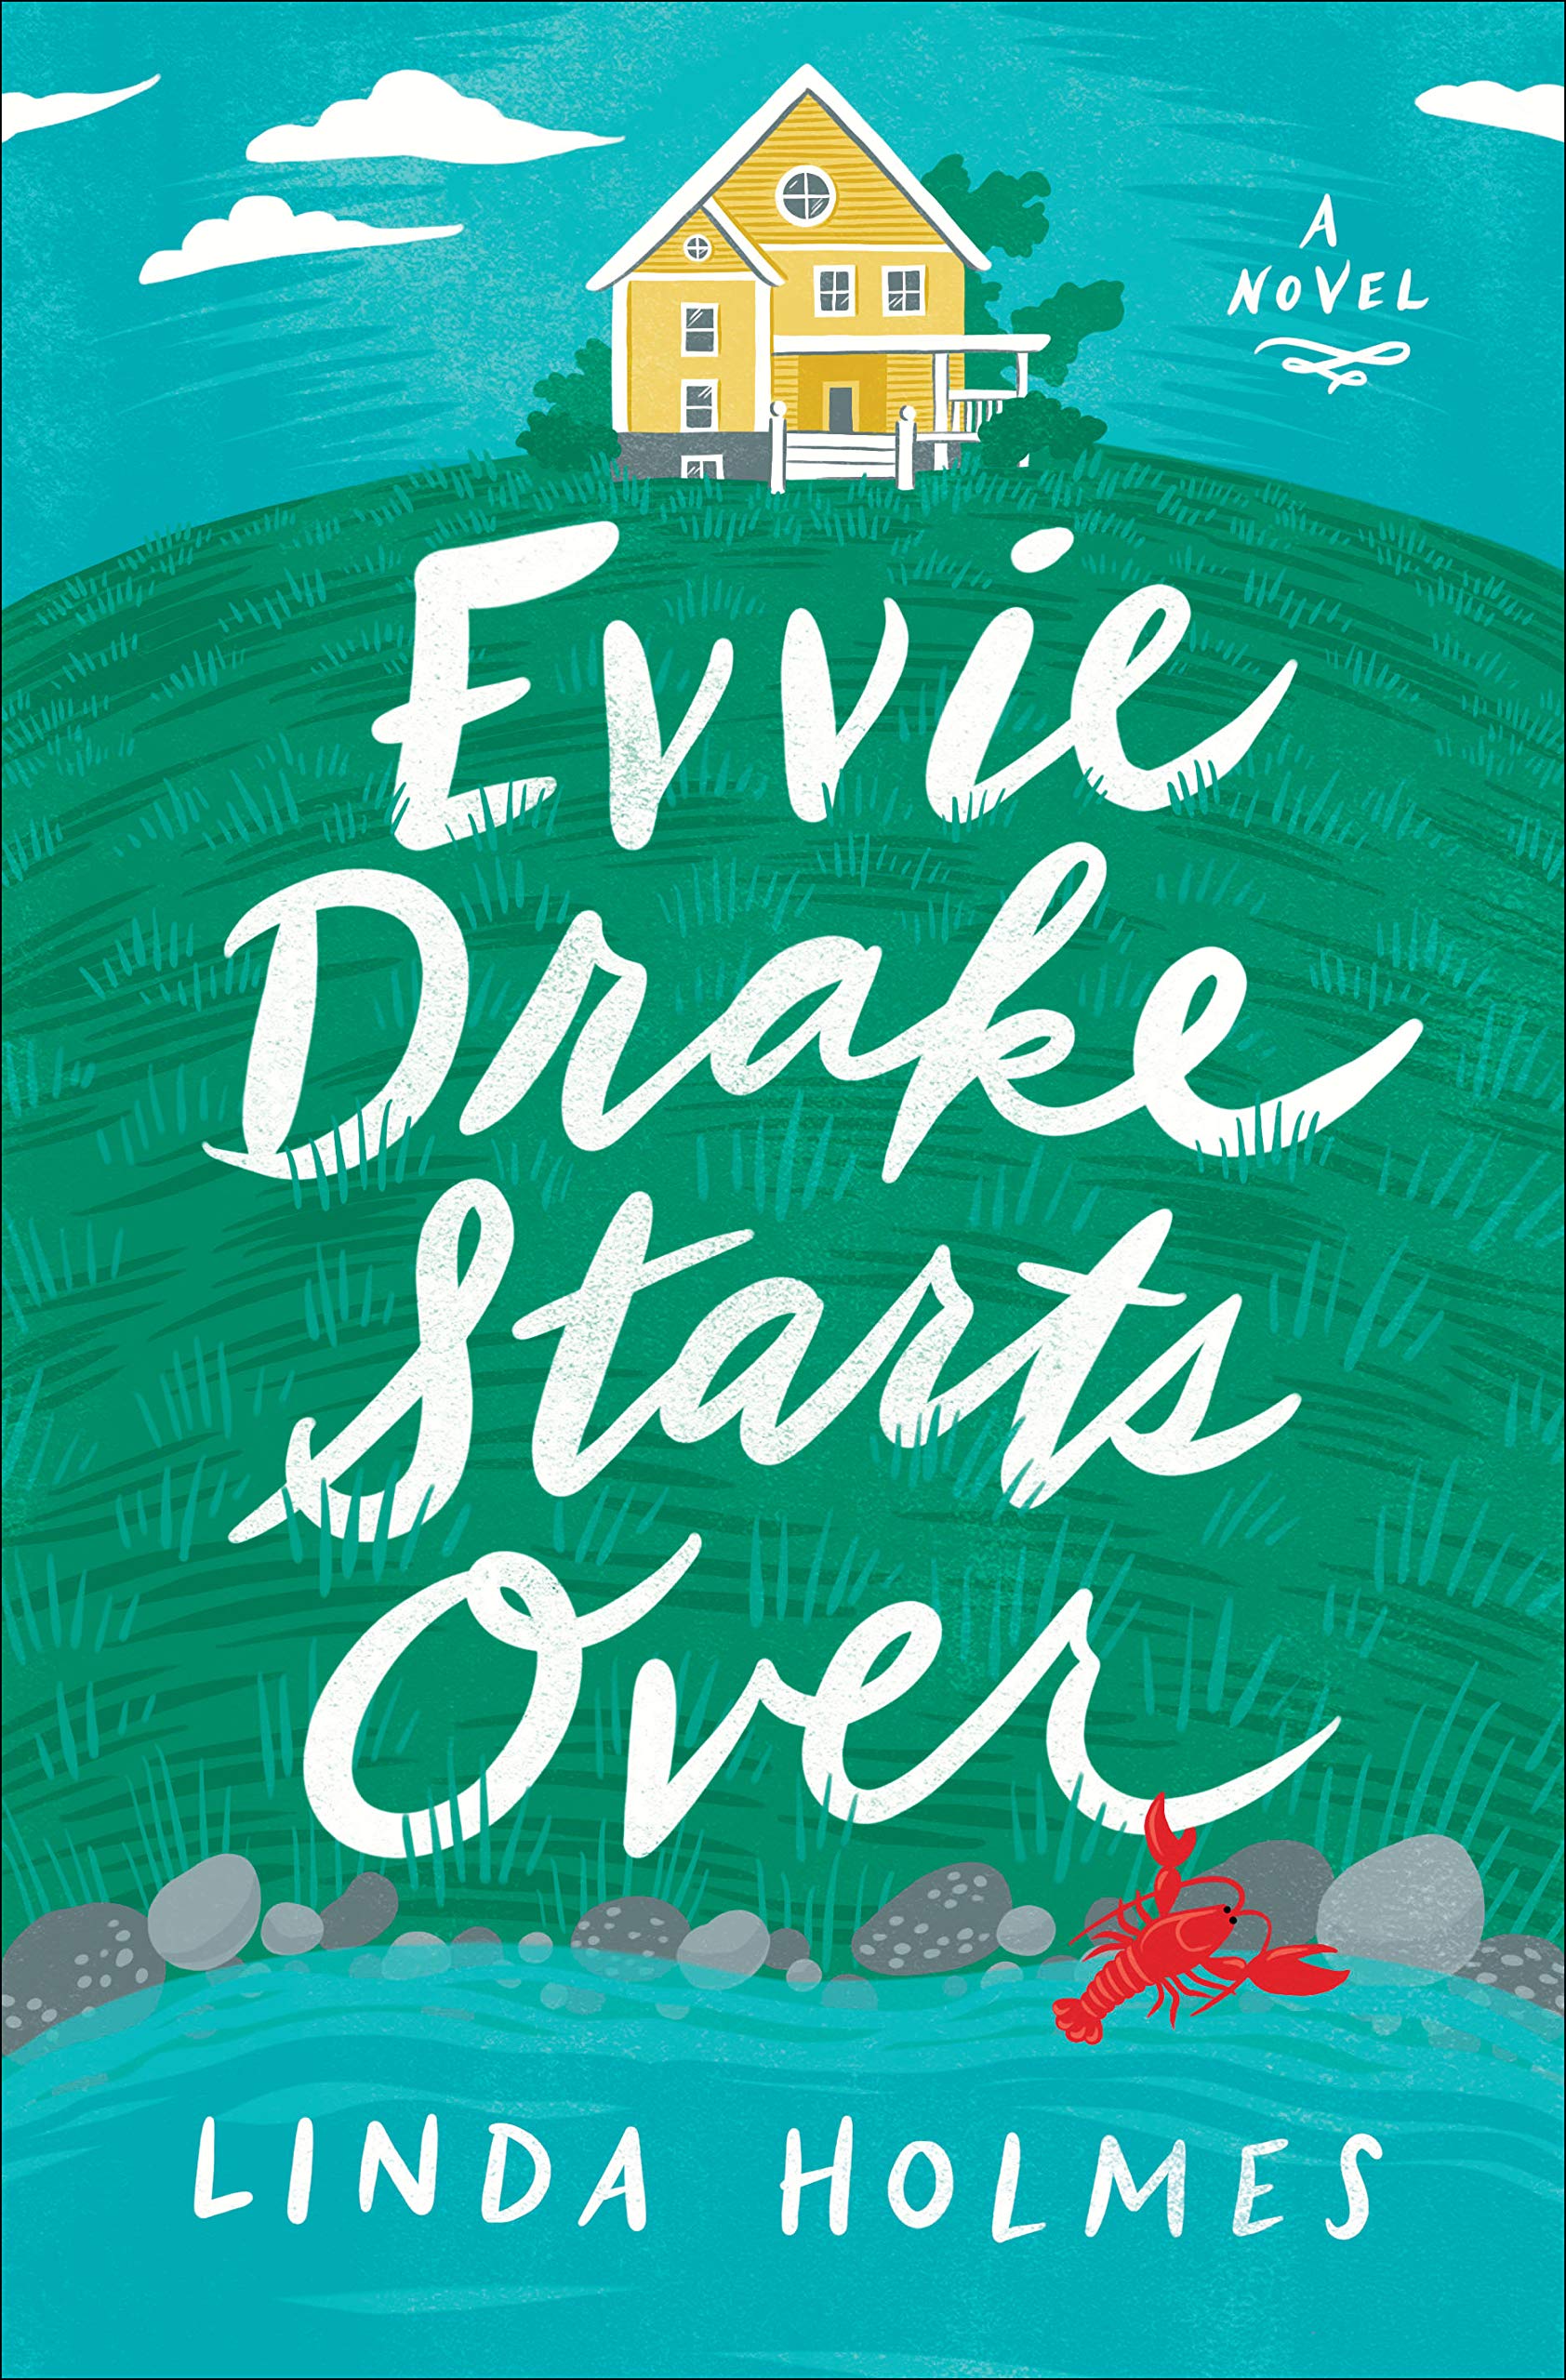 Evvie Drake Starts Over